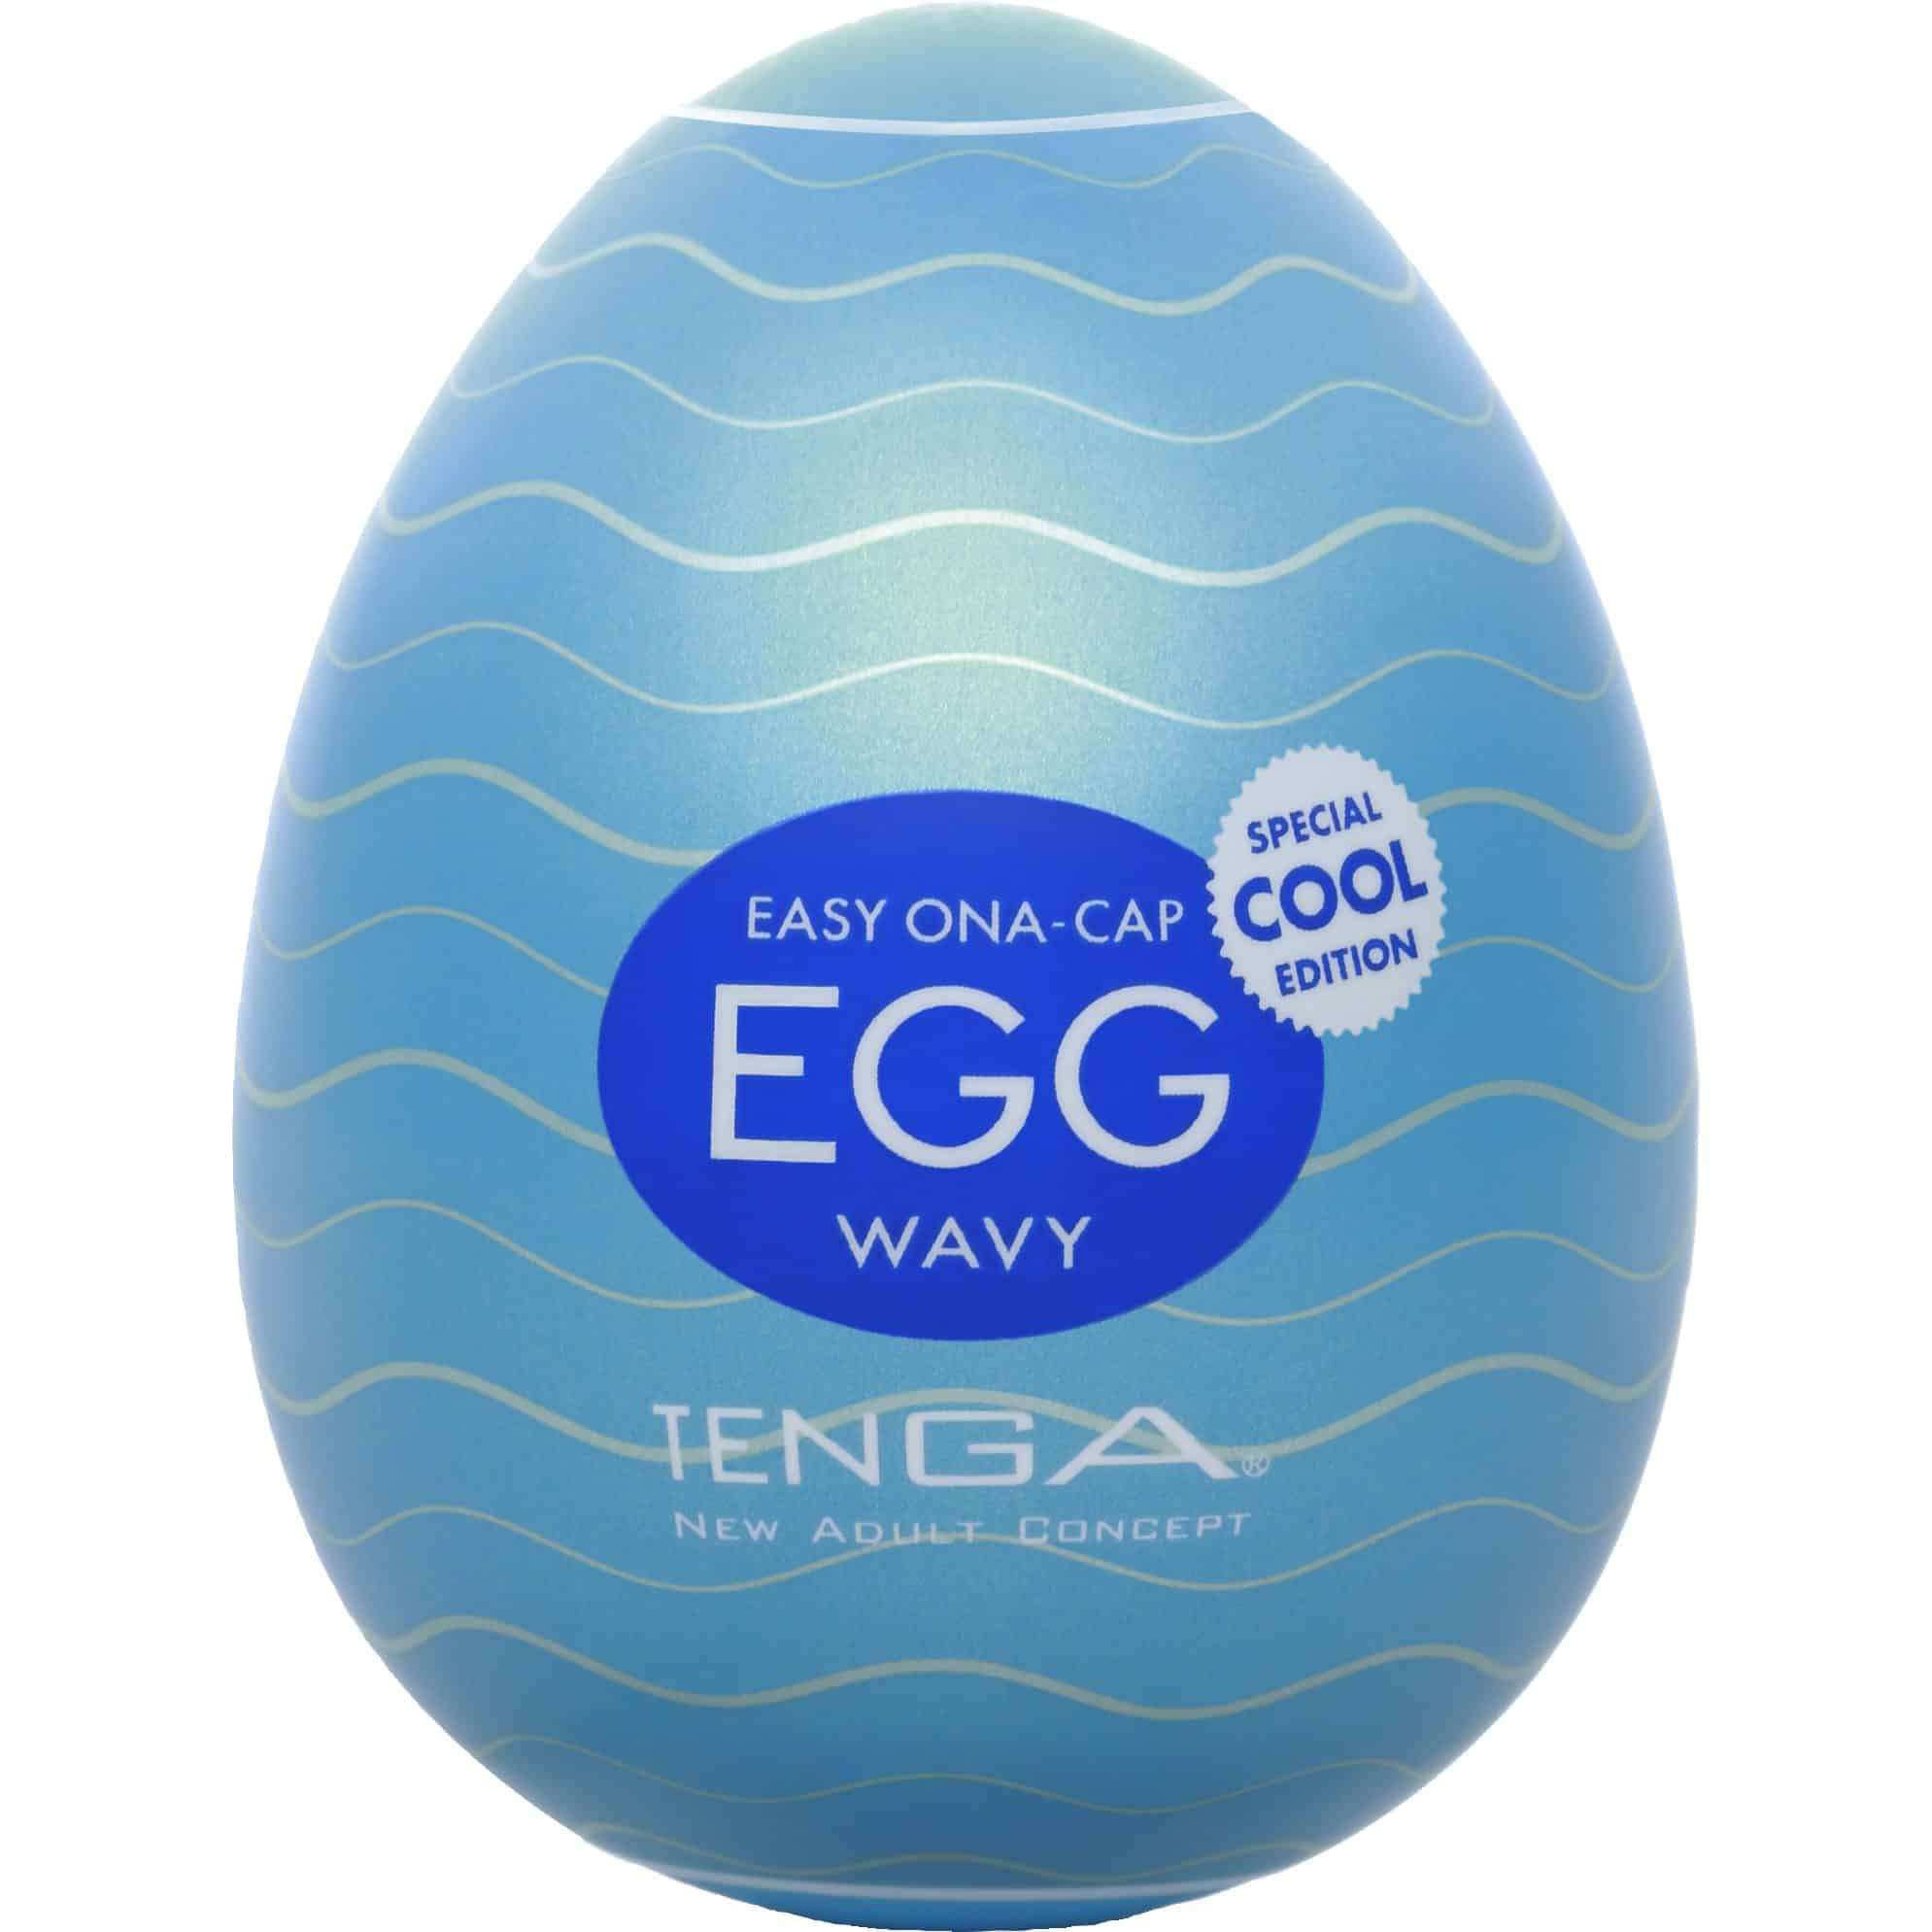 Tenga Egg Cool Edition Verpackung